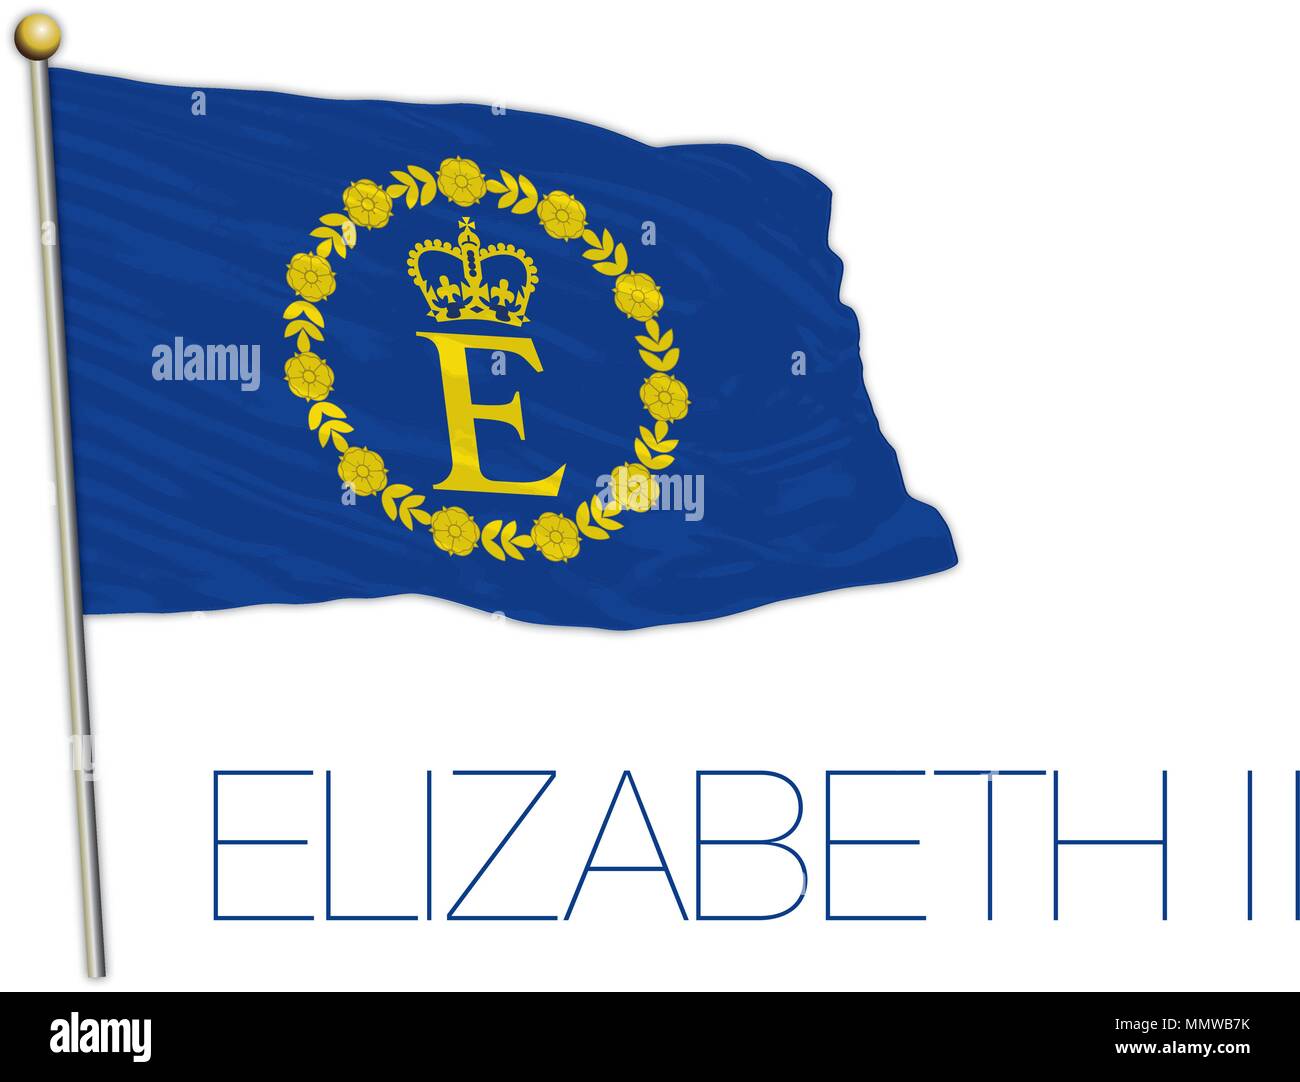 Elizabeth II official flag, United kingdom Stock Vector